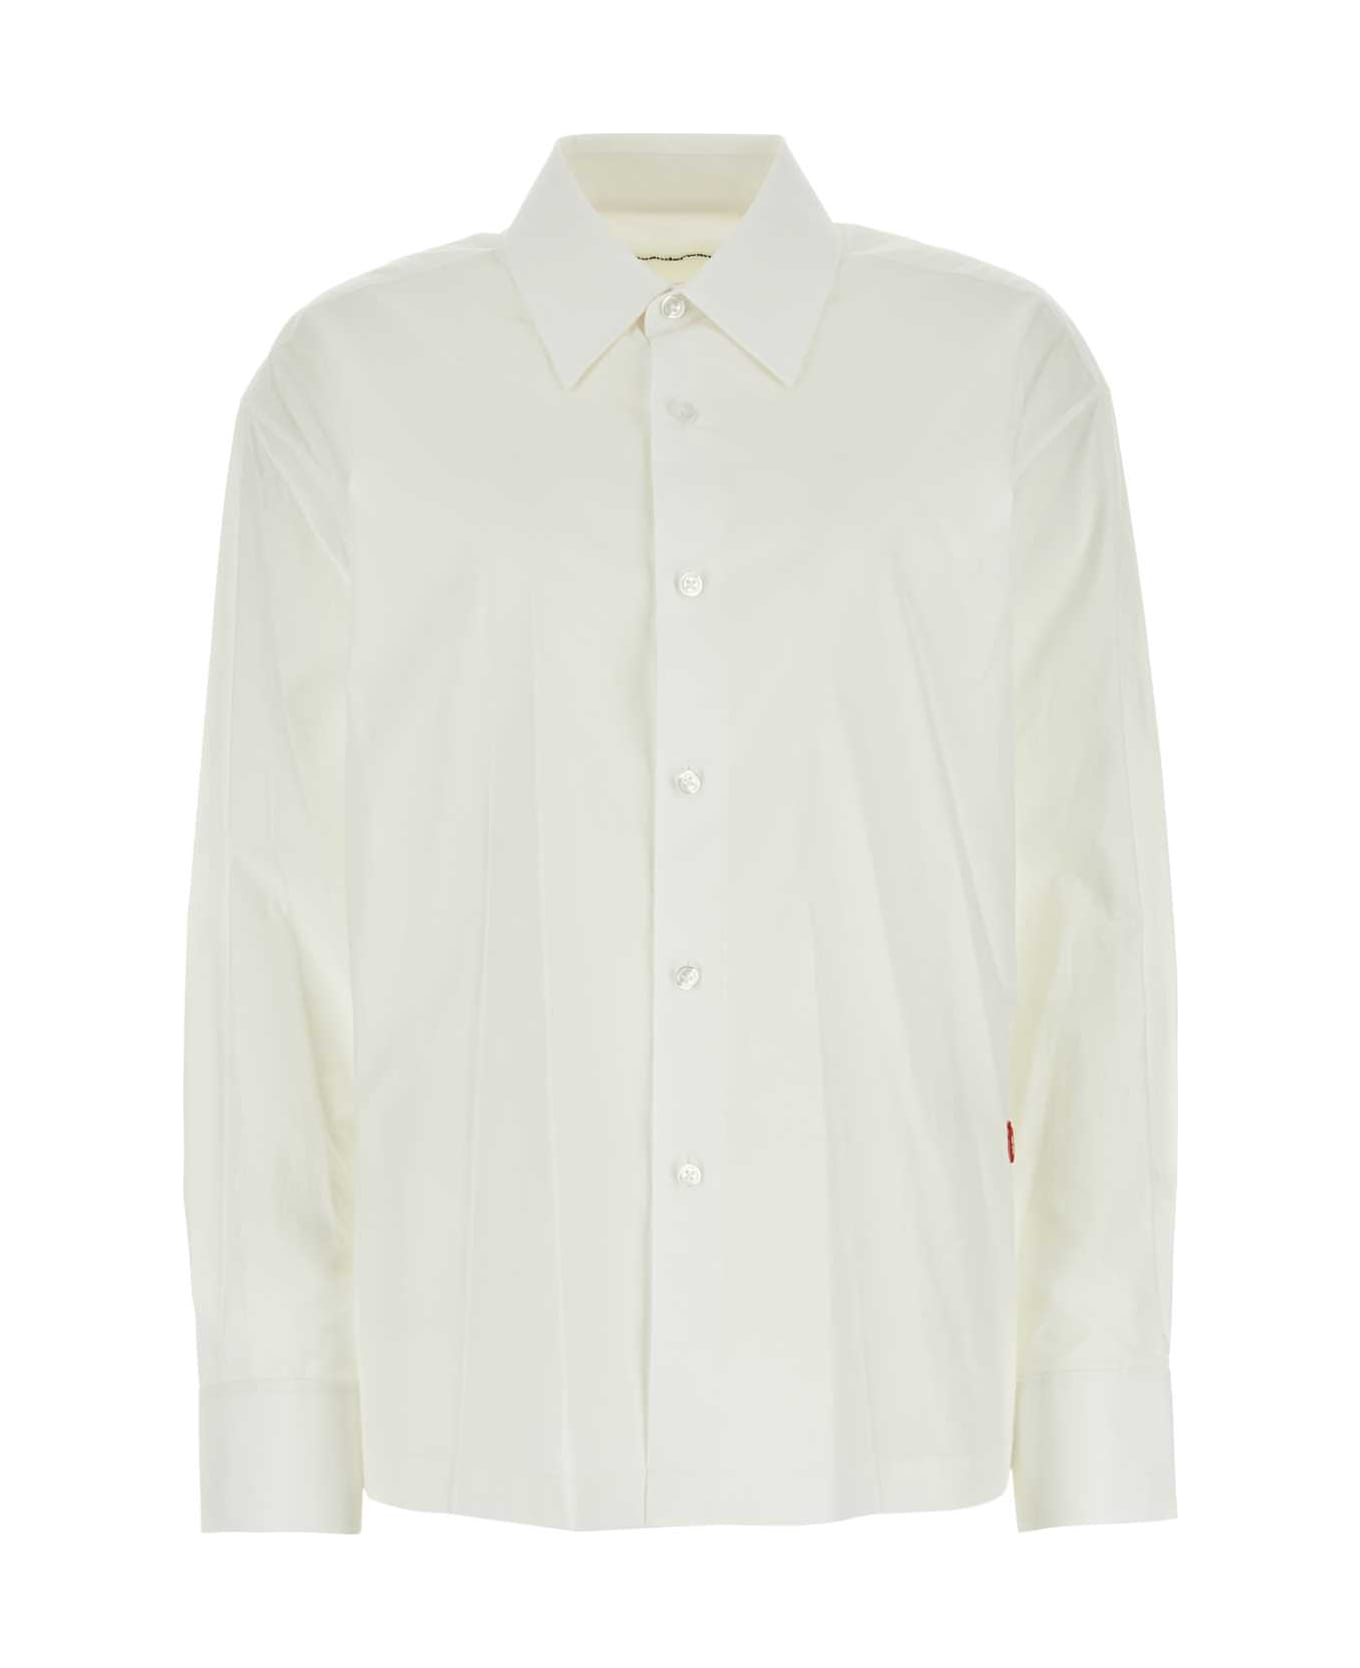 T by Alexander Wang White Poplin Shirt - White